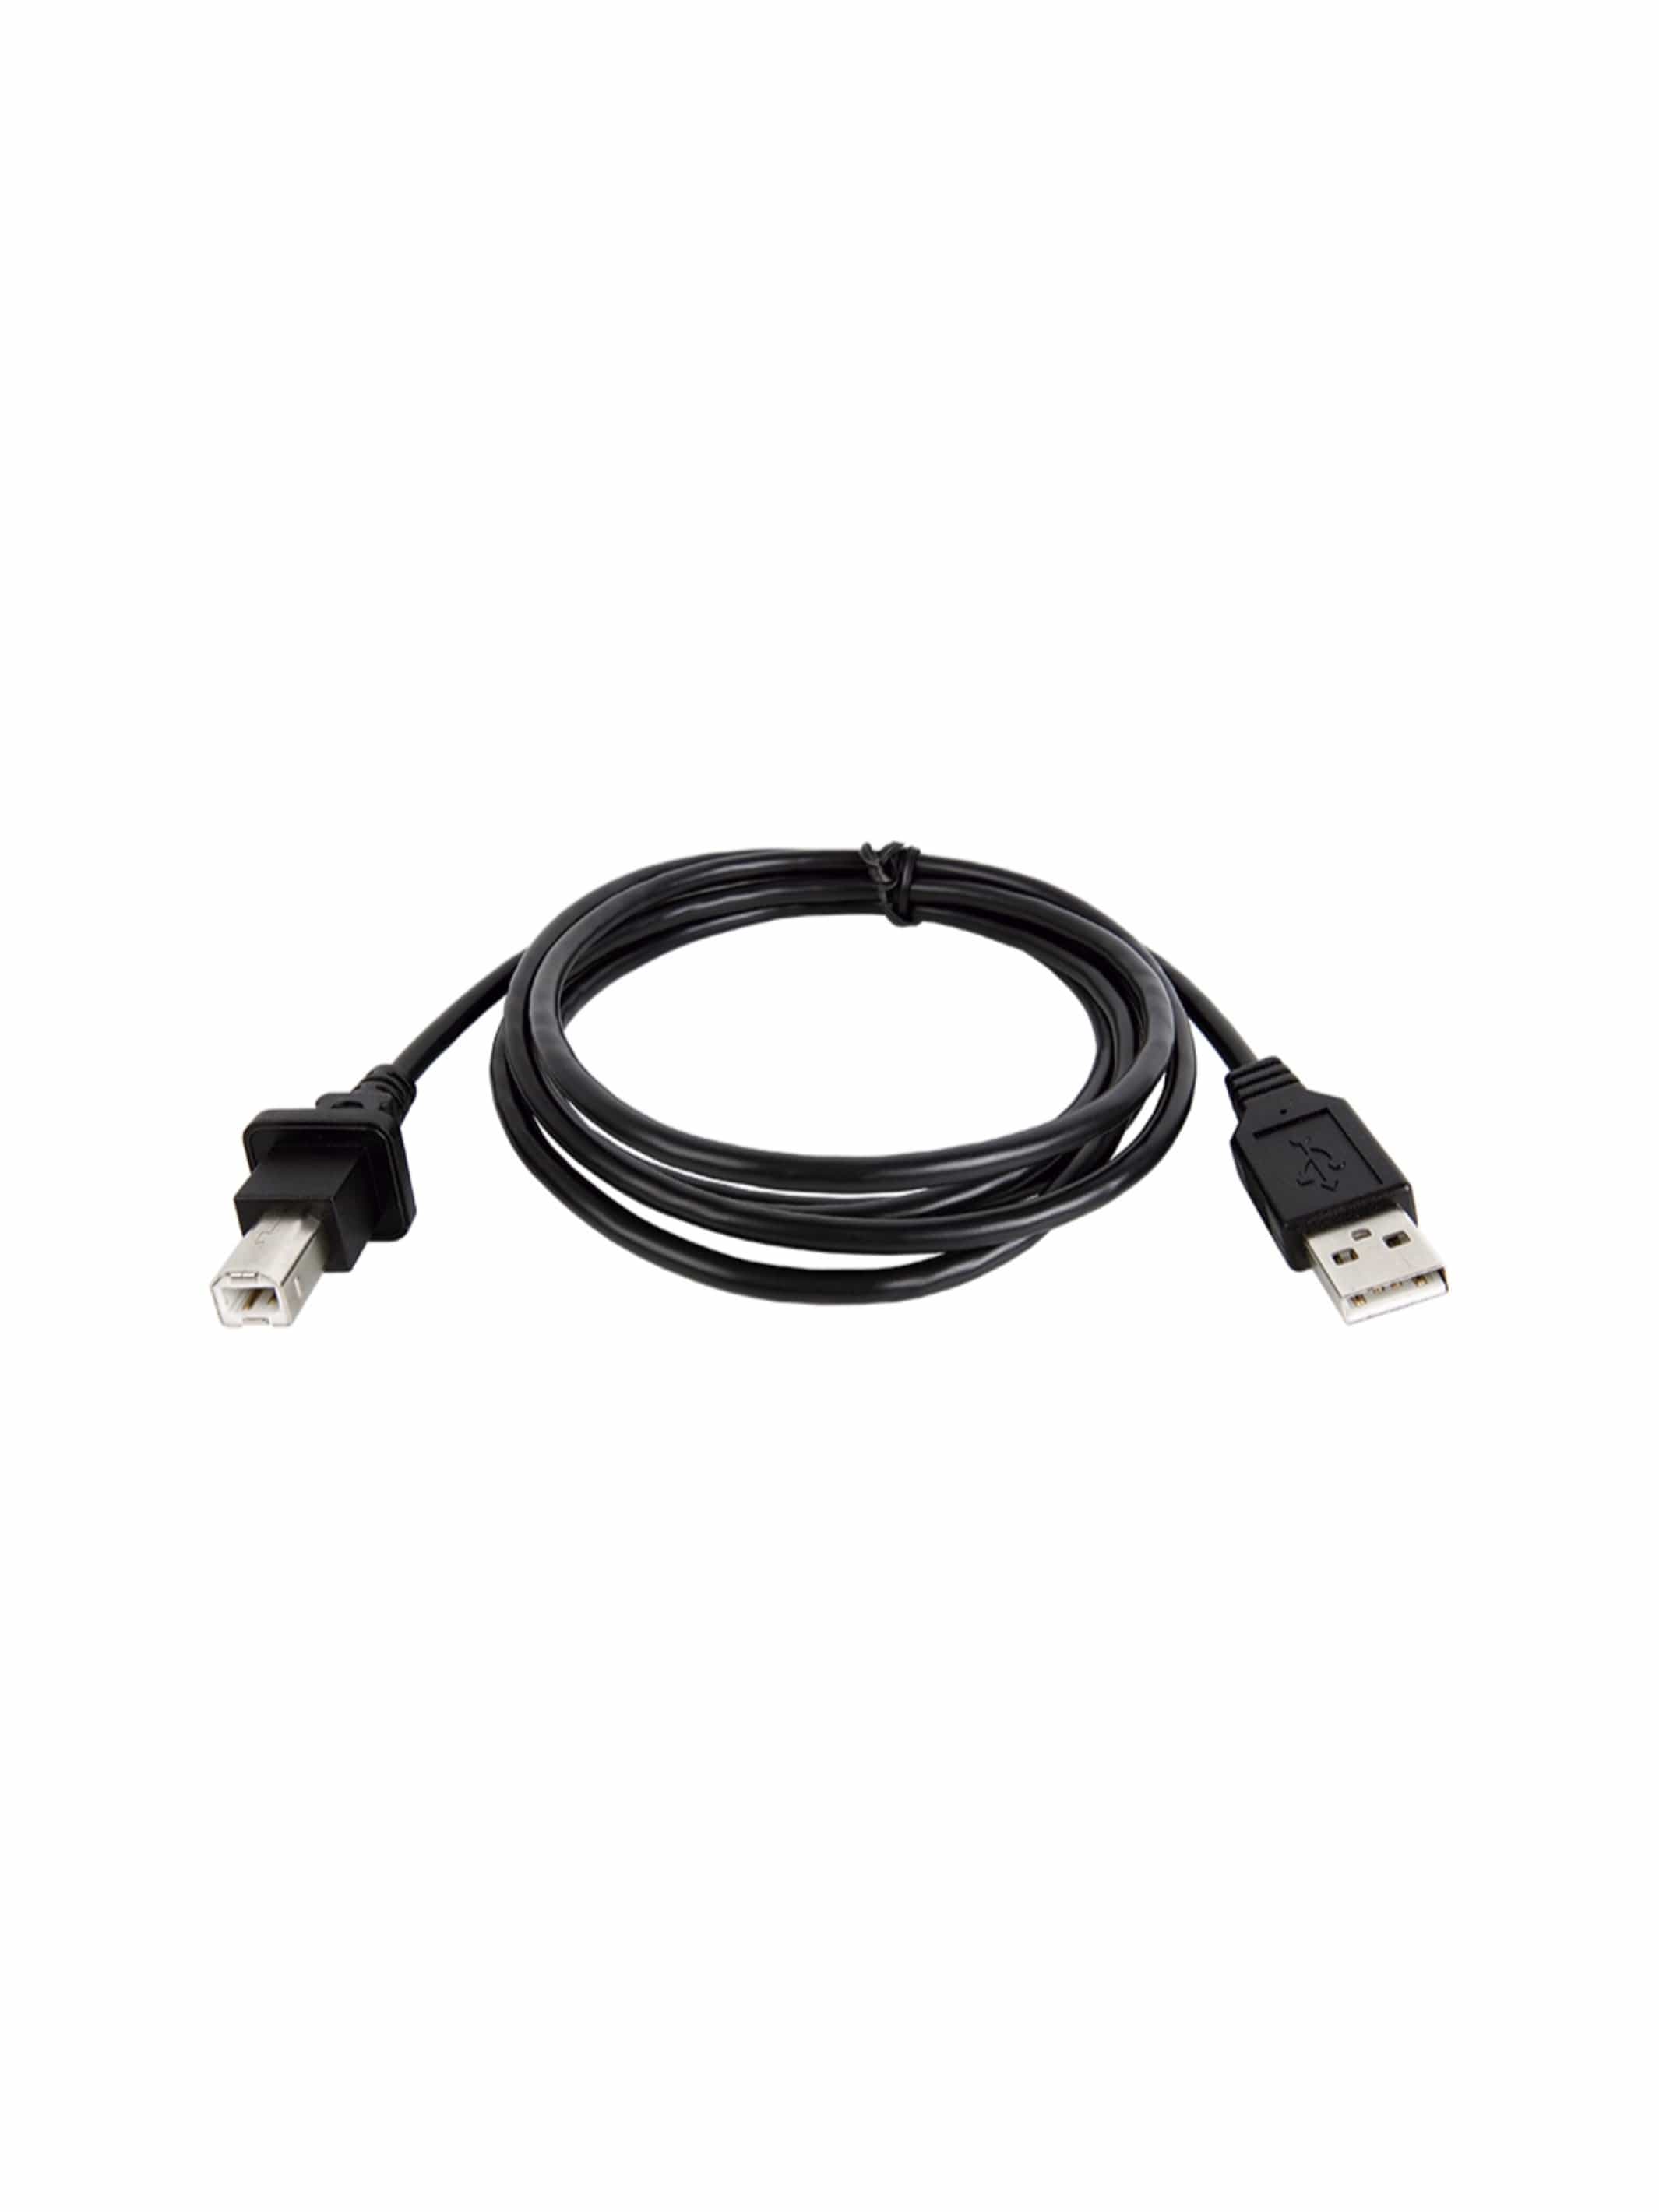 JDC107.9 Cojali Jaltest USB Cable - Bundle - Jaltest Agricultural & On Highway, Commercial Vehicle & Construction, MH, Power Systems Diagnostic Kit